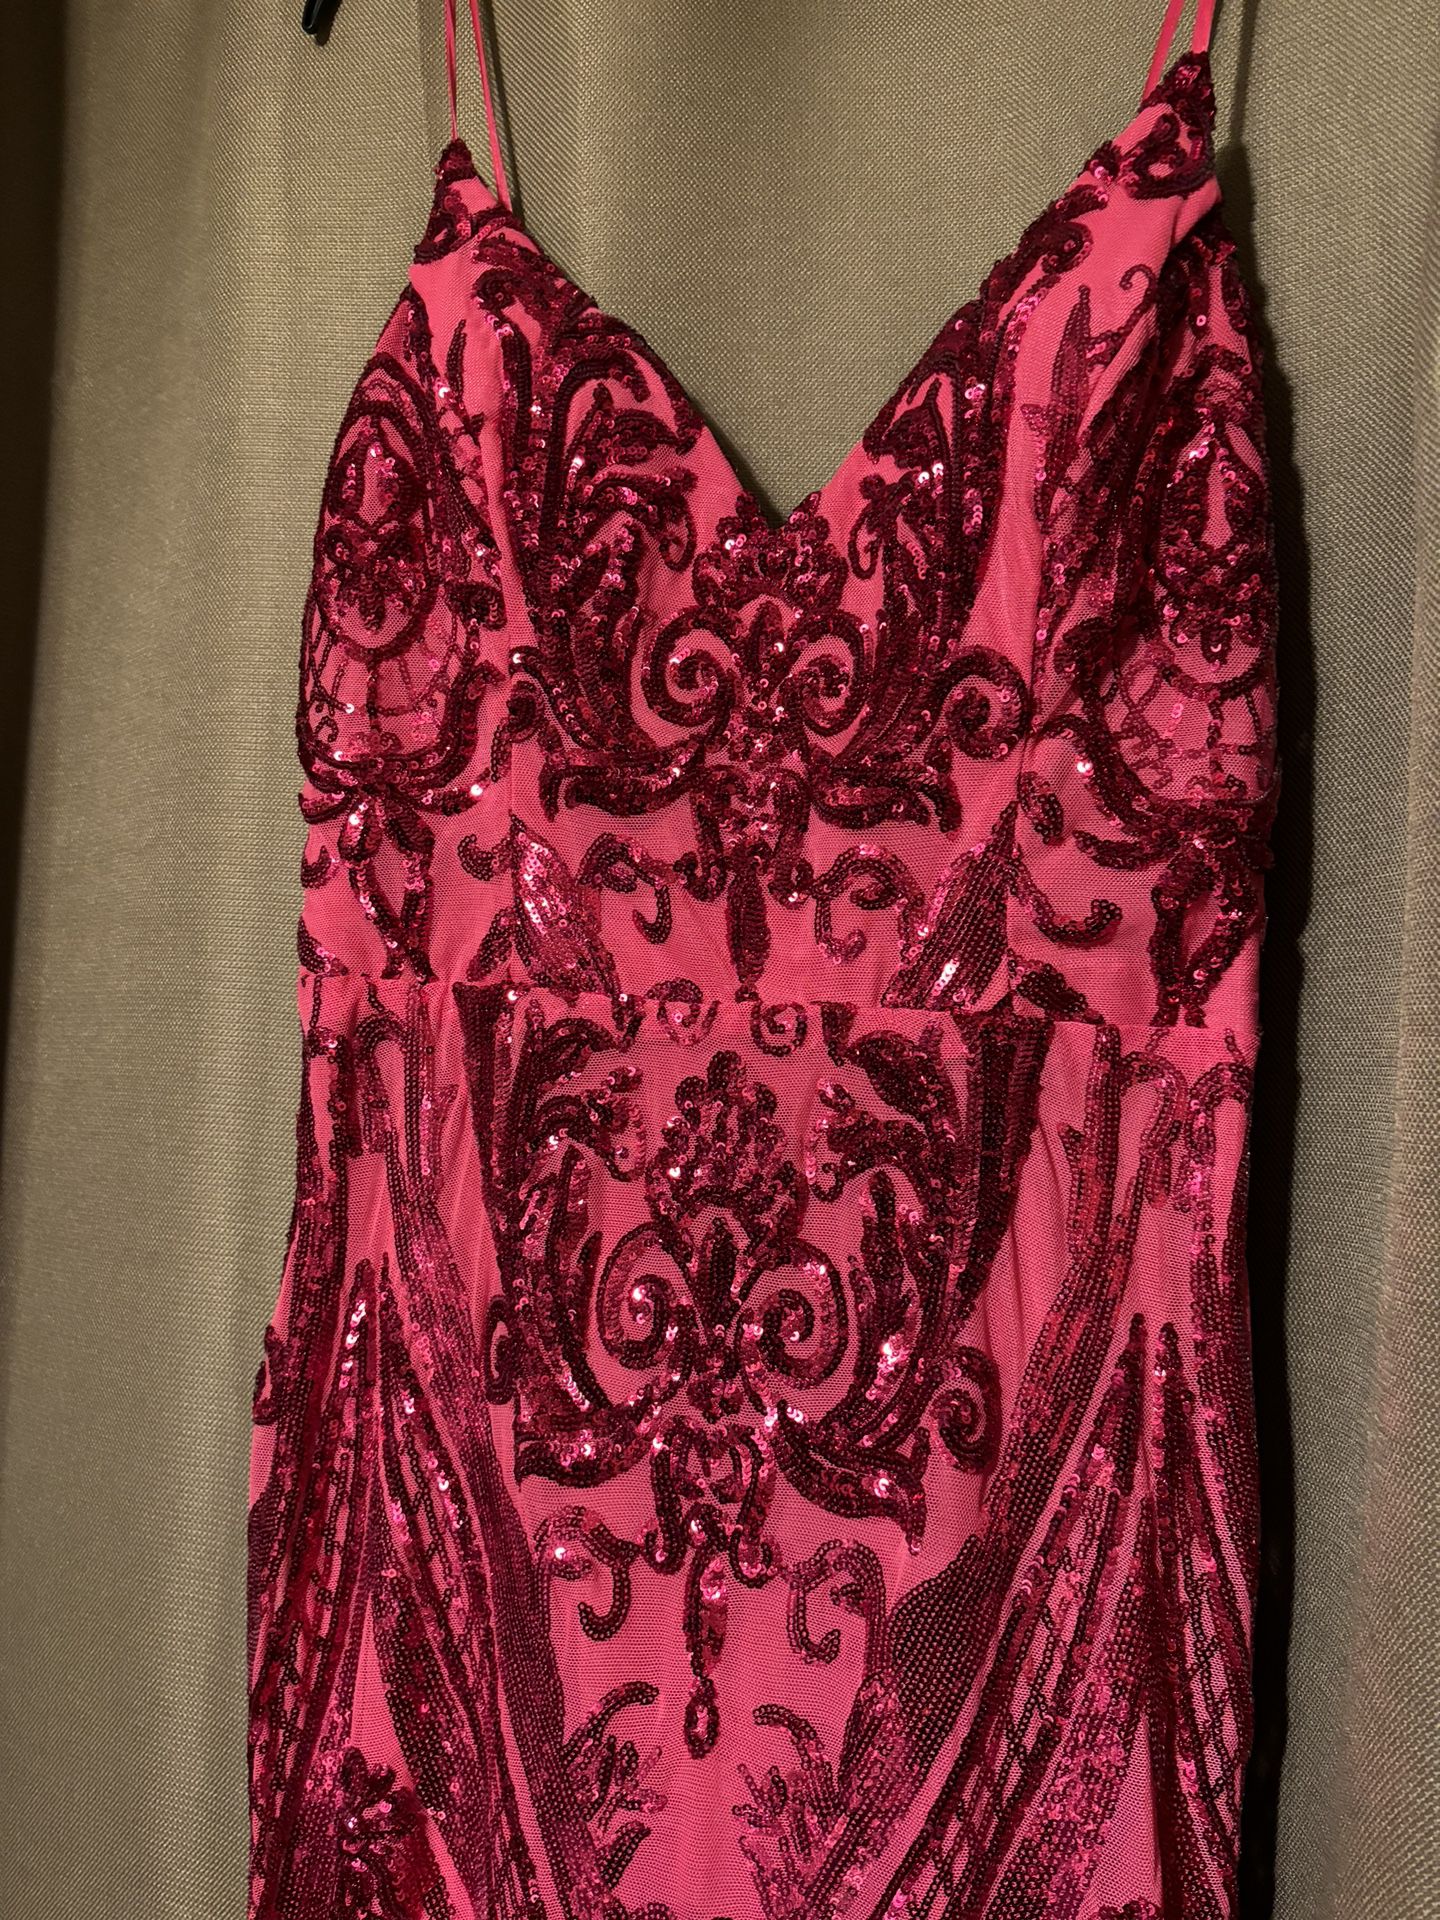 Beautiful Hot Pink Sequins quinceañera/Prom Dress